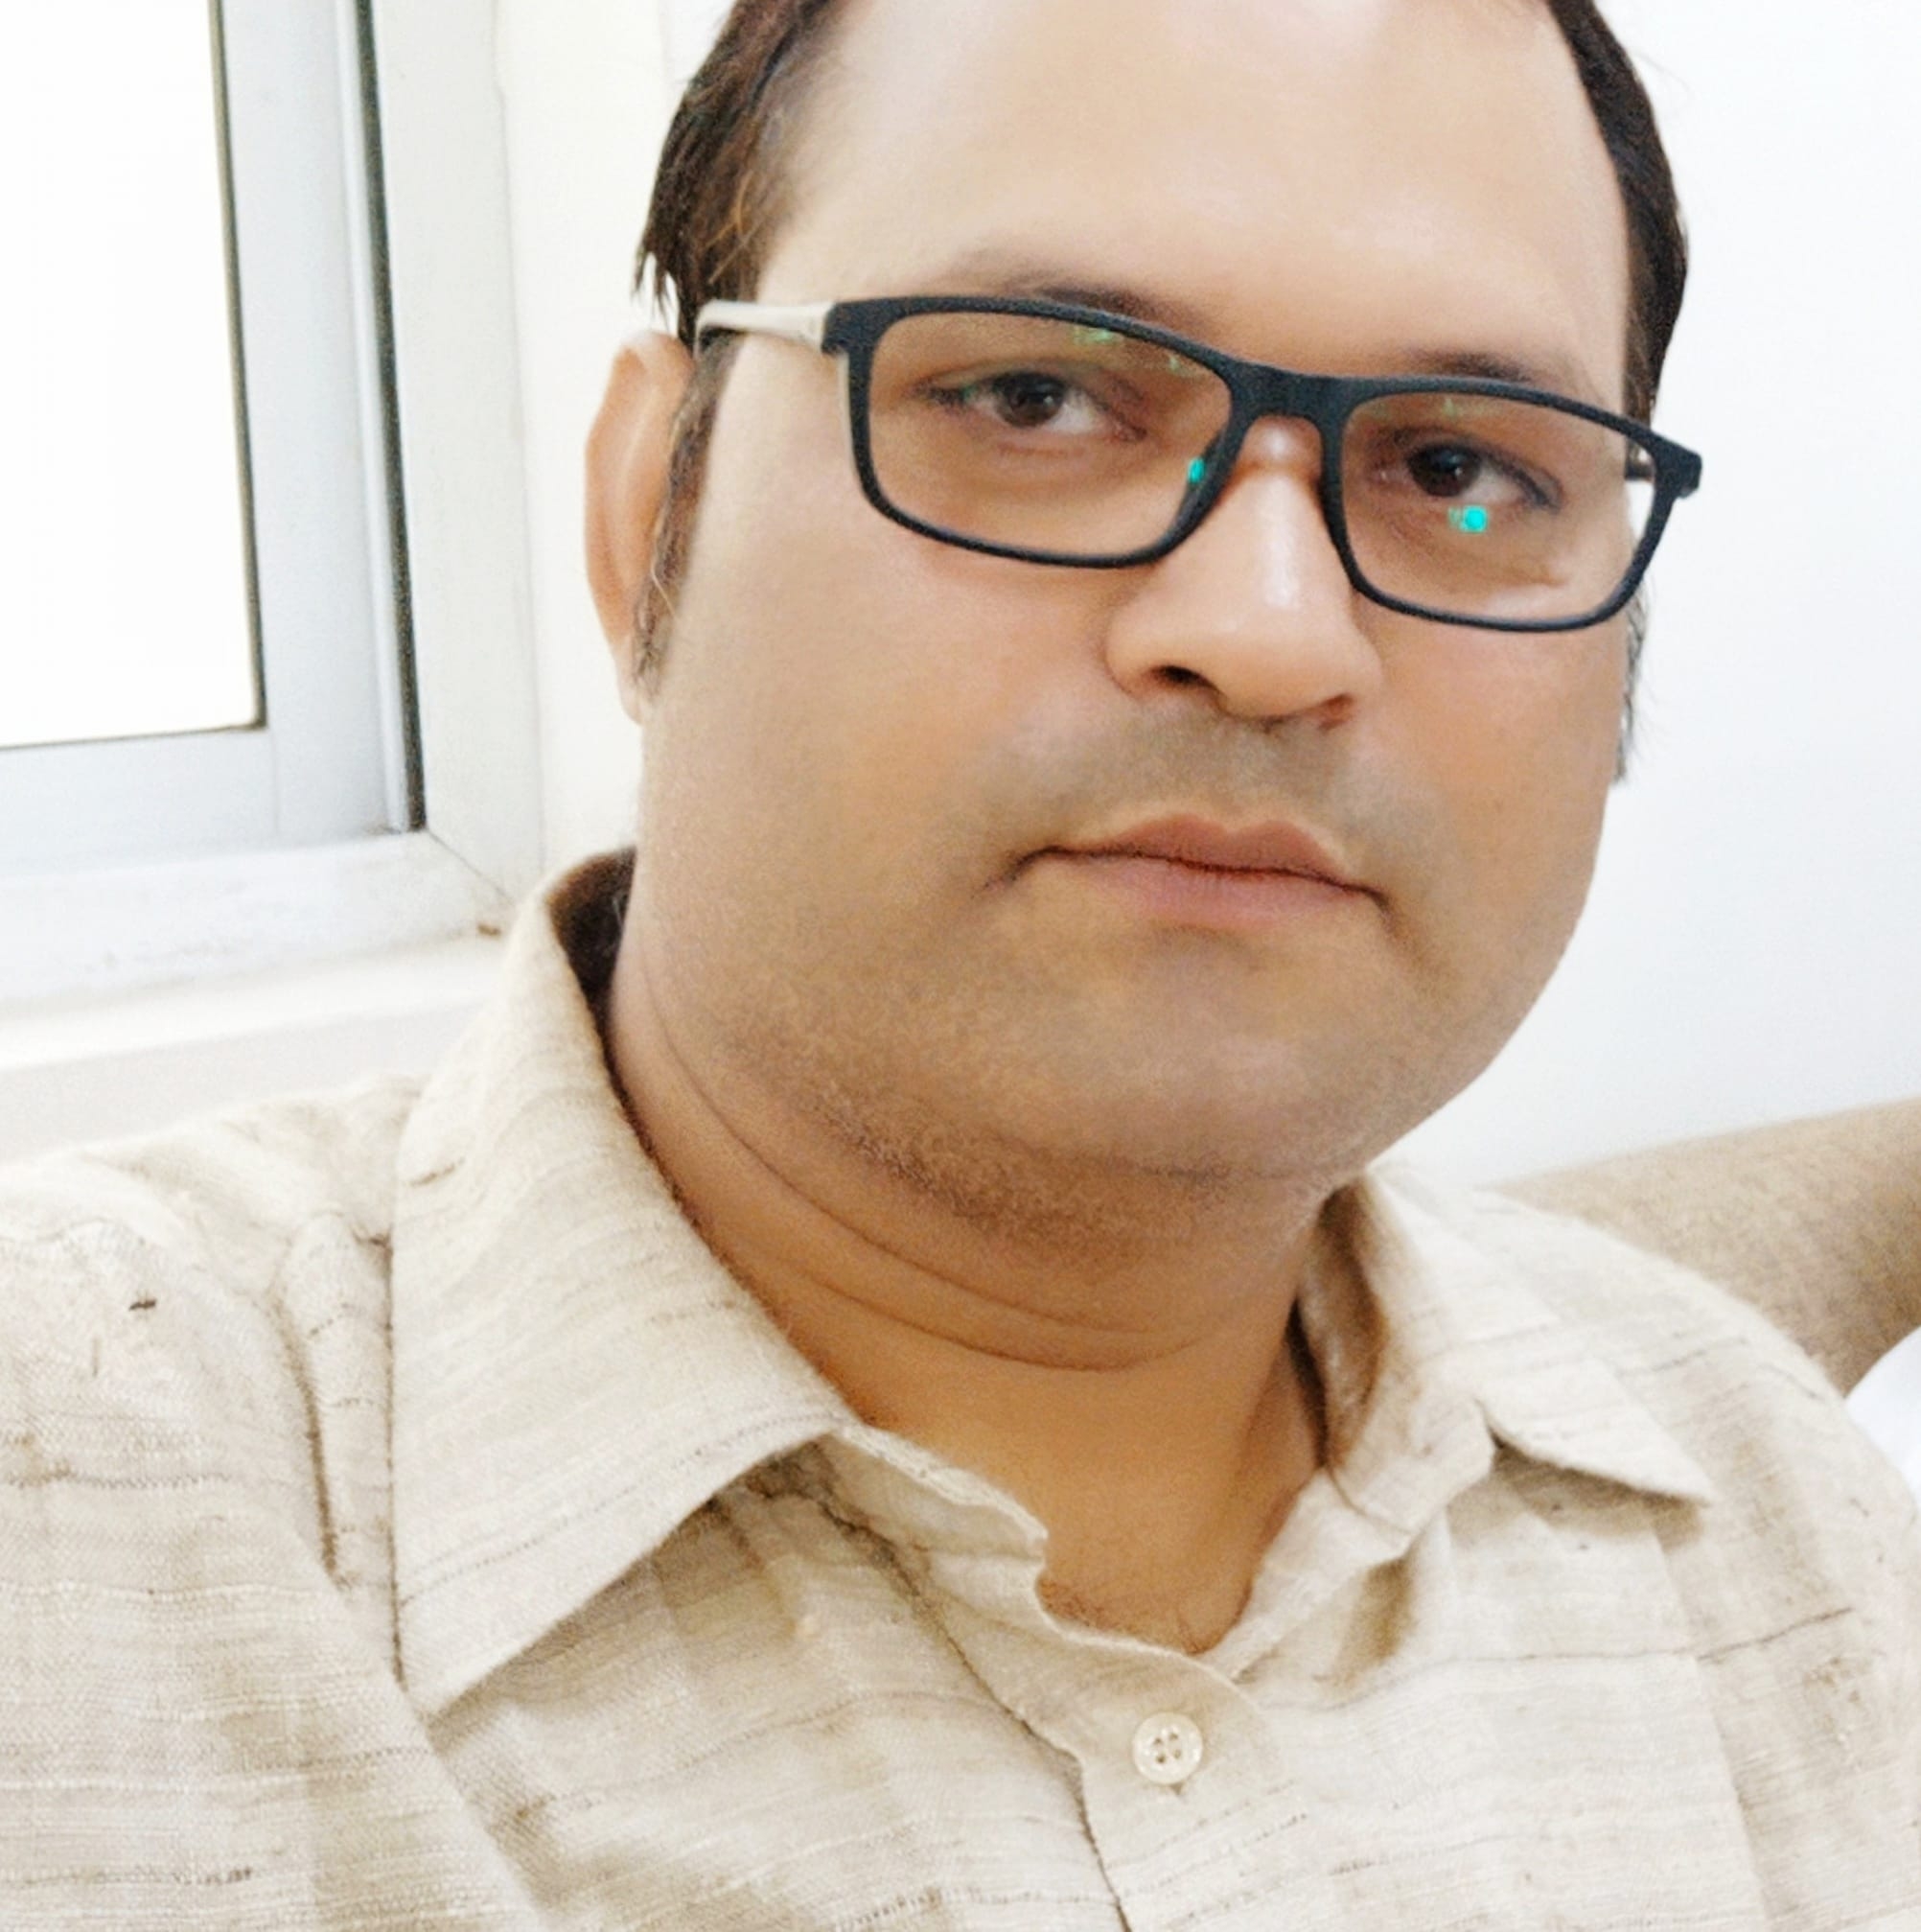 Rajesh Kumar Singh